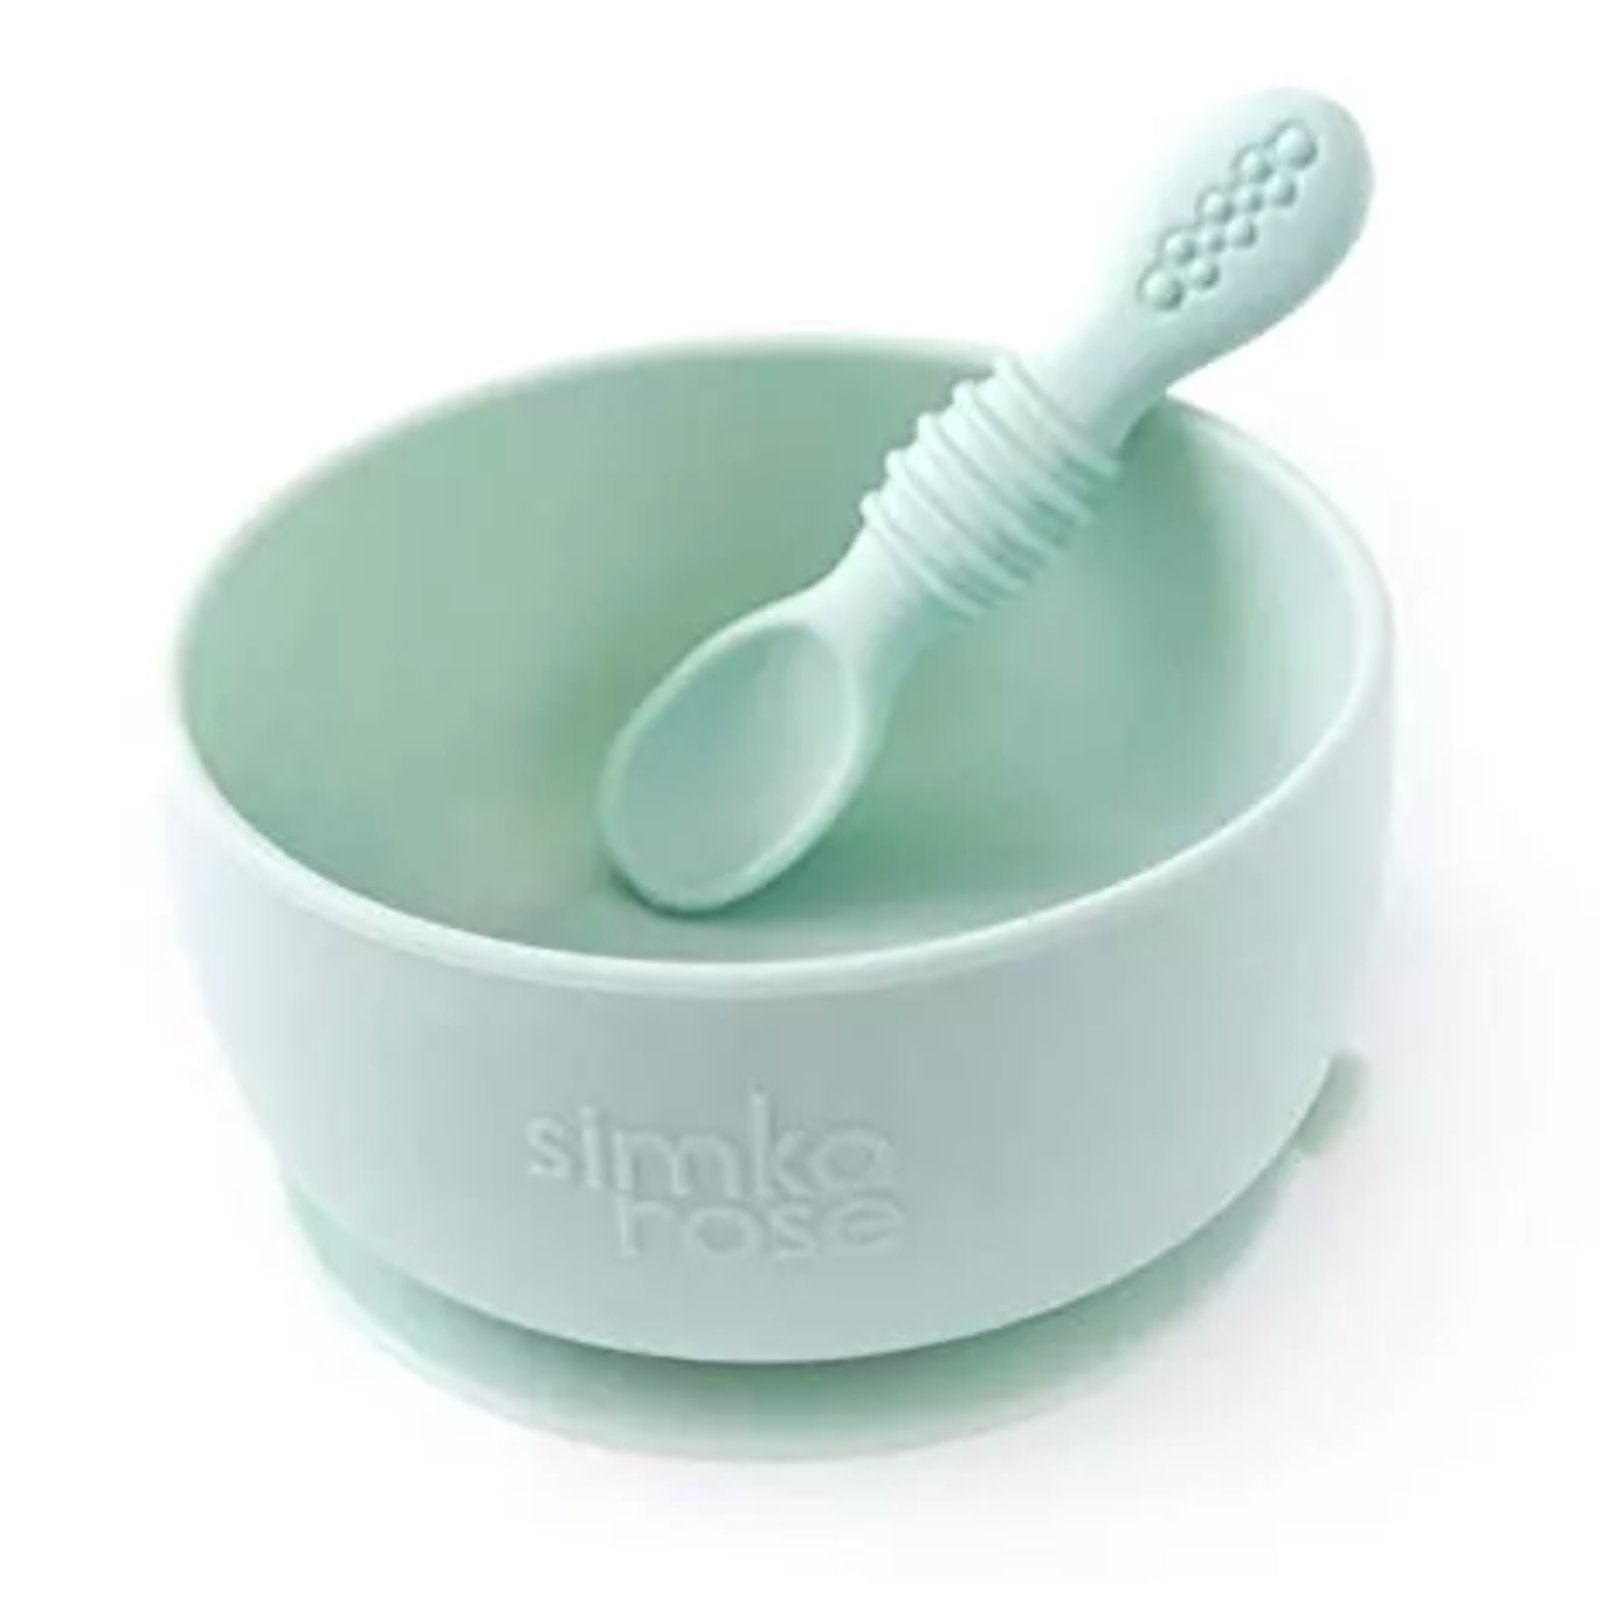 Silicone Baby Teething Spoon - Set of 6 - Multicolor, Simka Rose